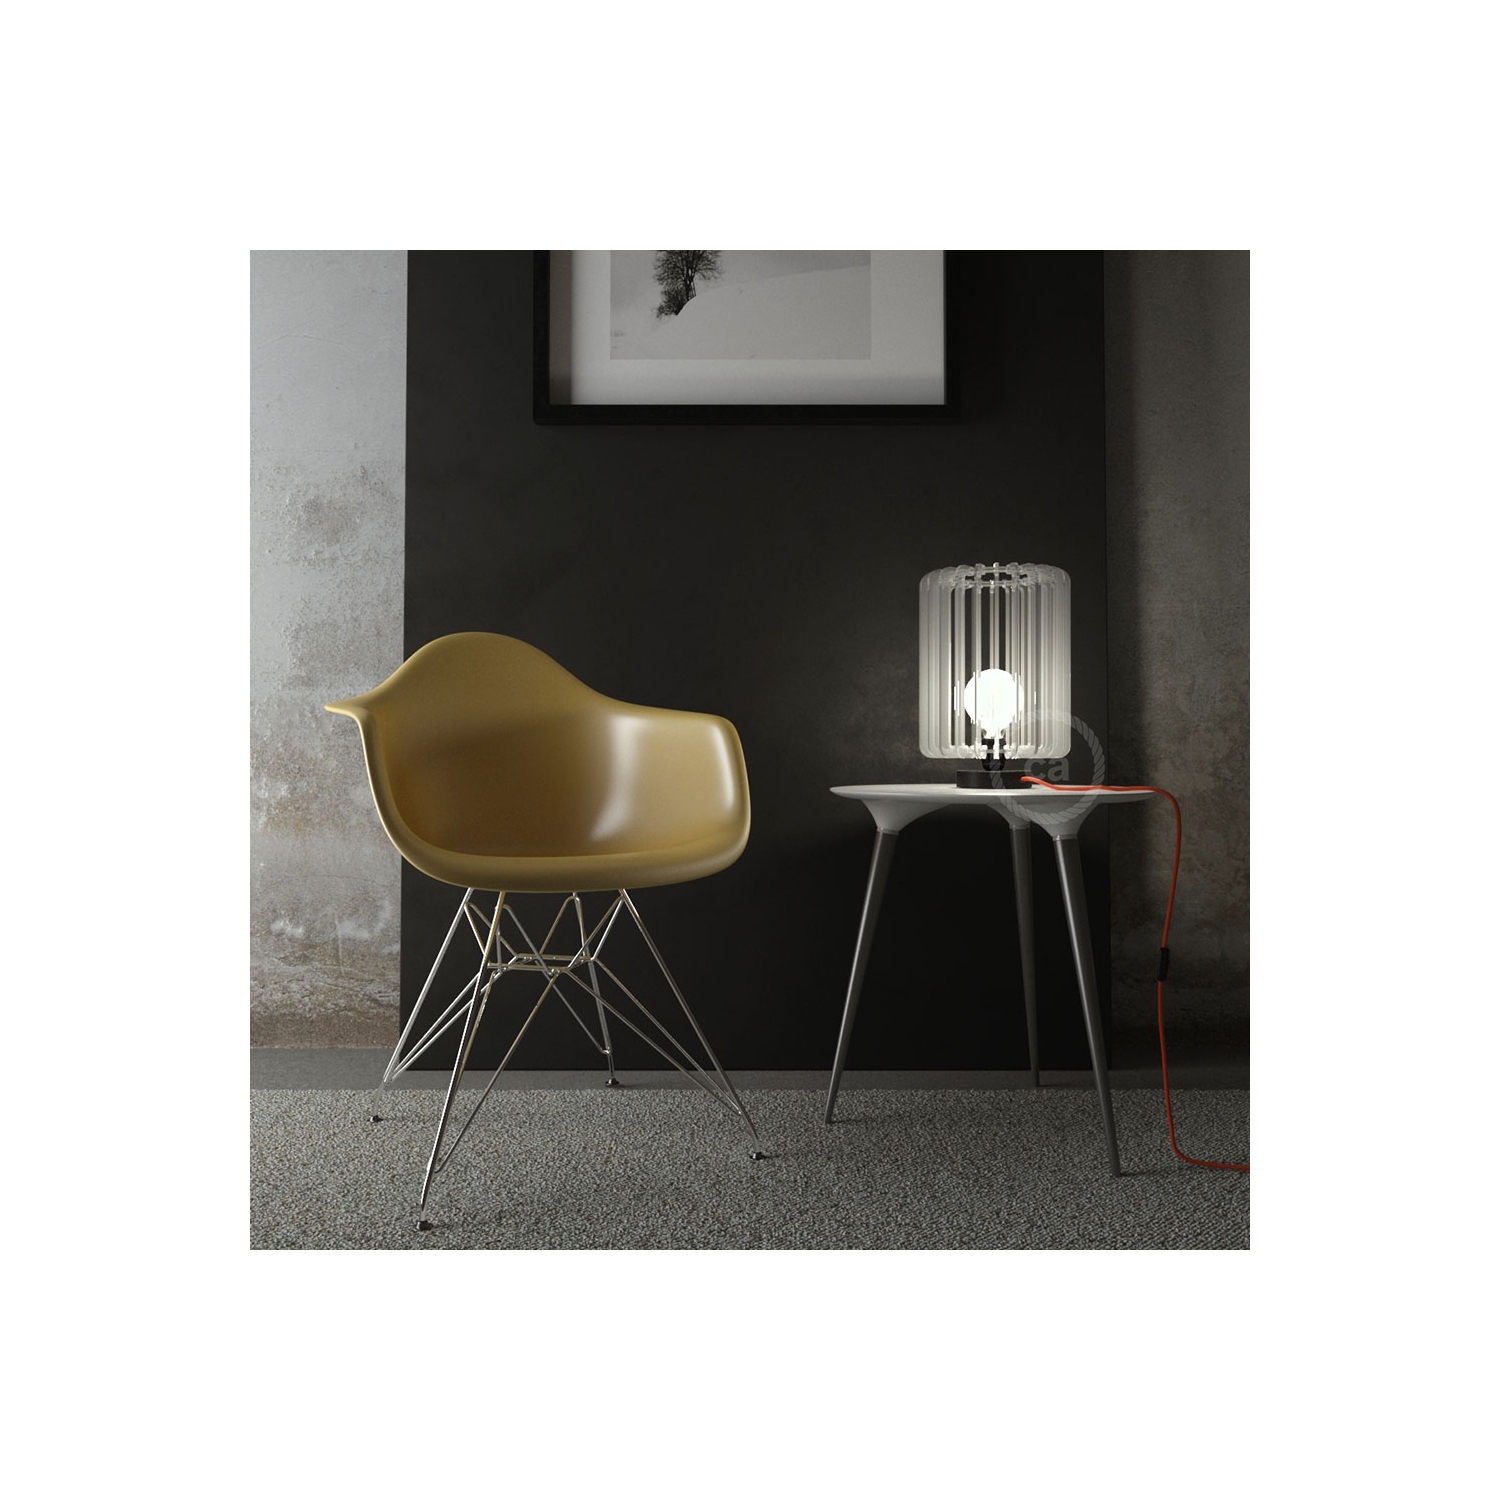 The Posaluce | Black Metal Table Lamp for Lampshade